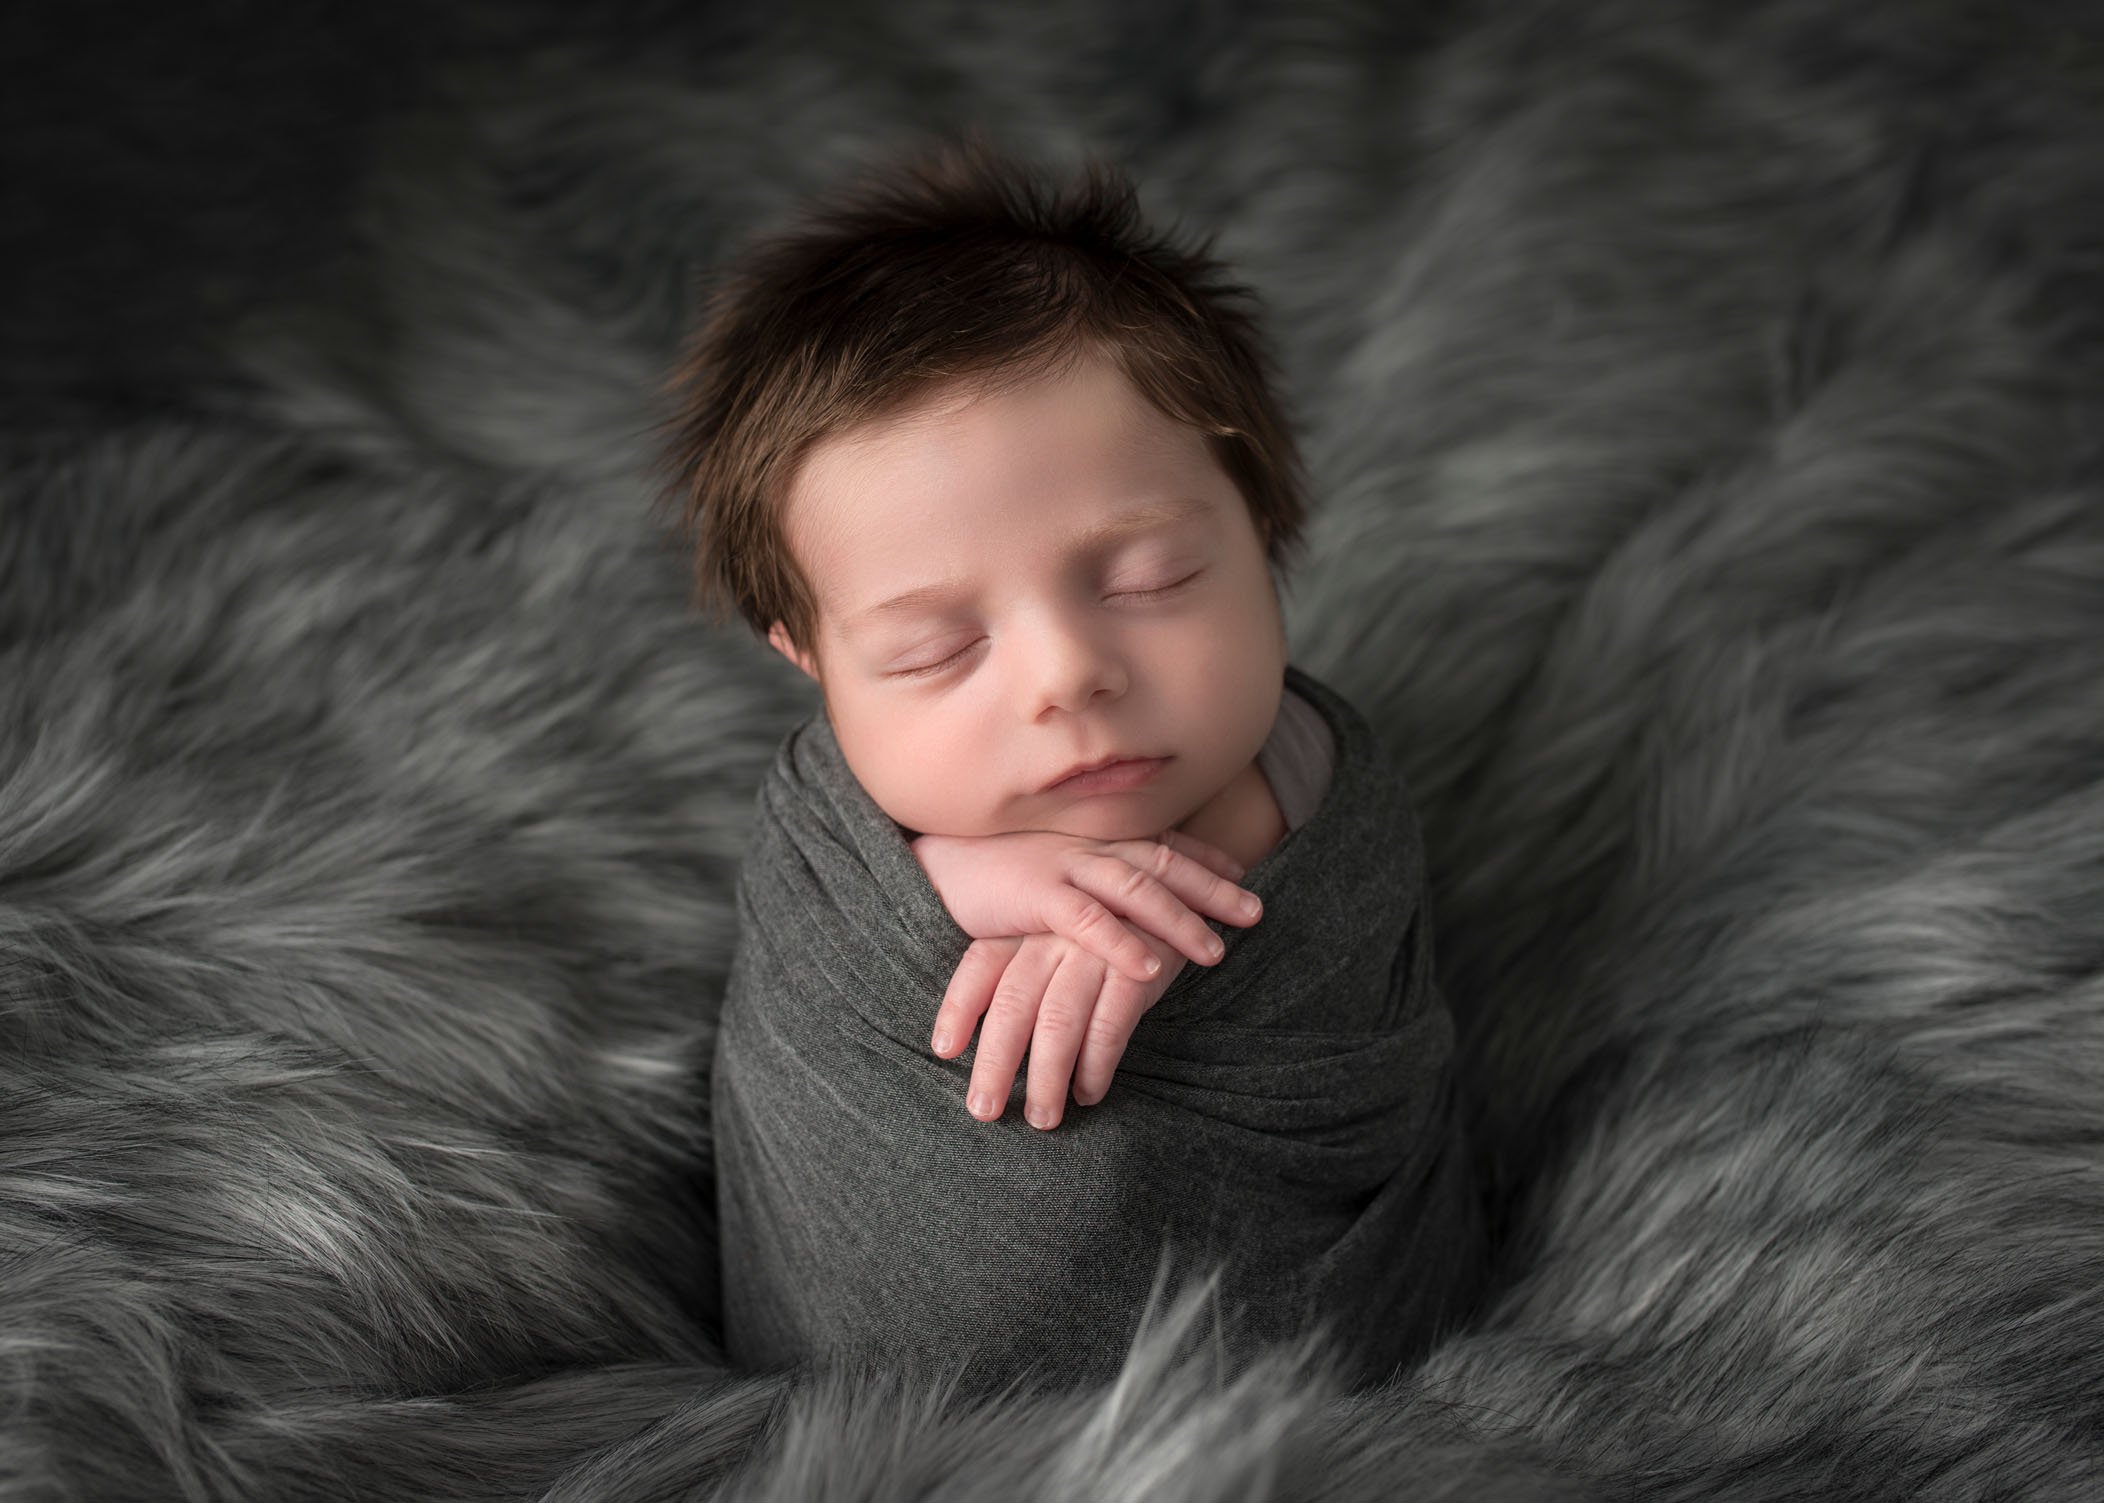 newborn baby boy potato sack pose sleeping in grey fur